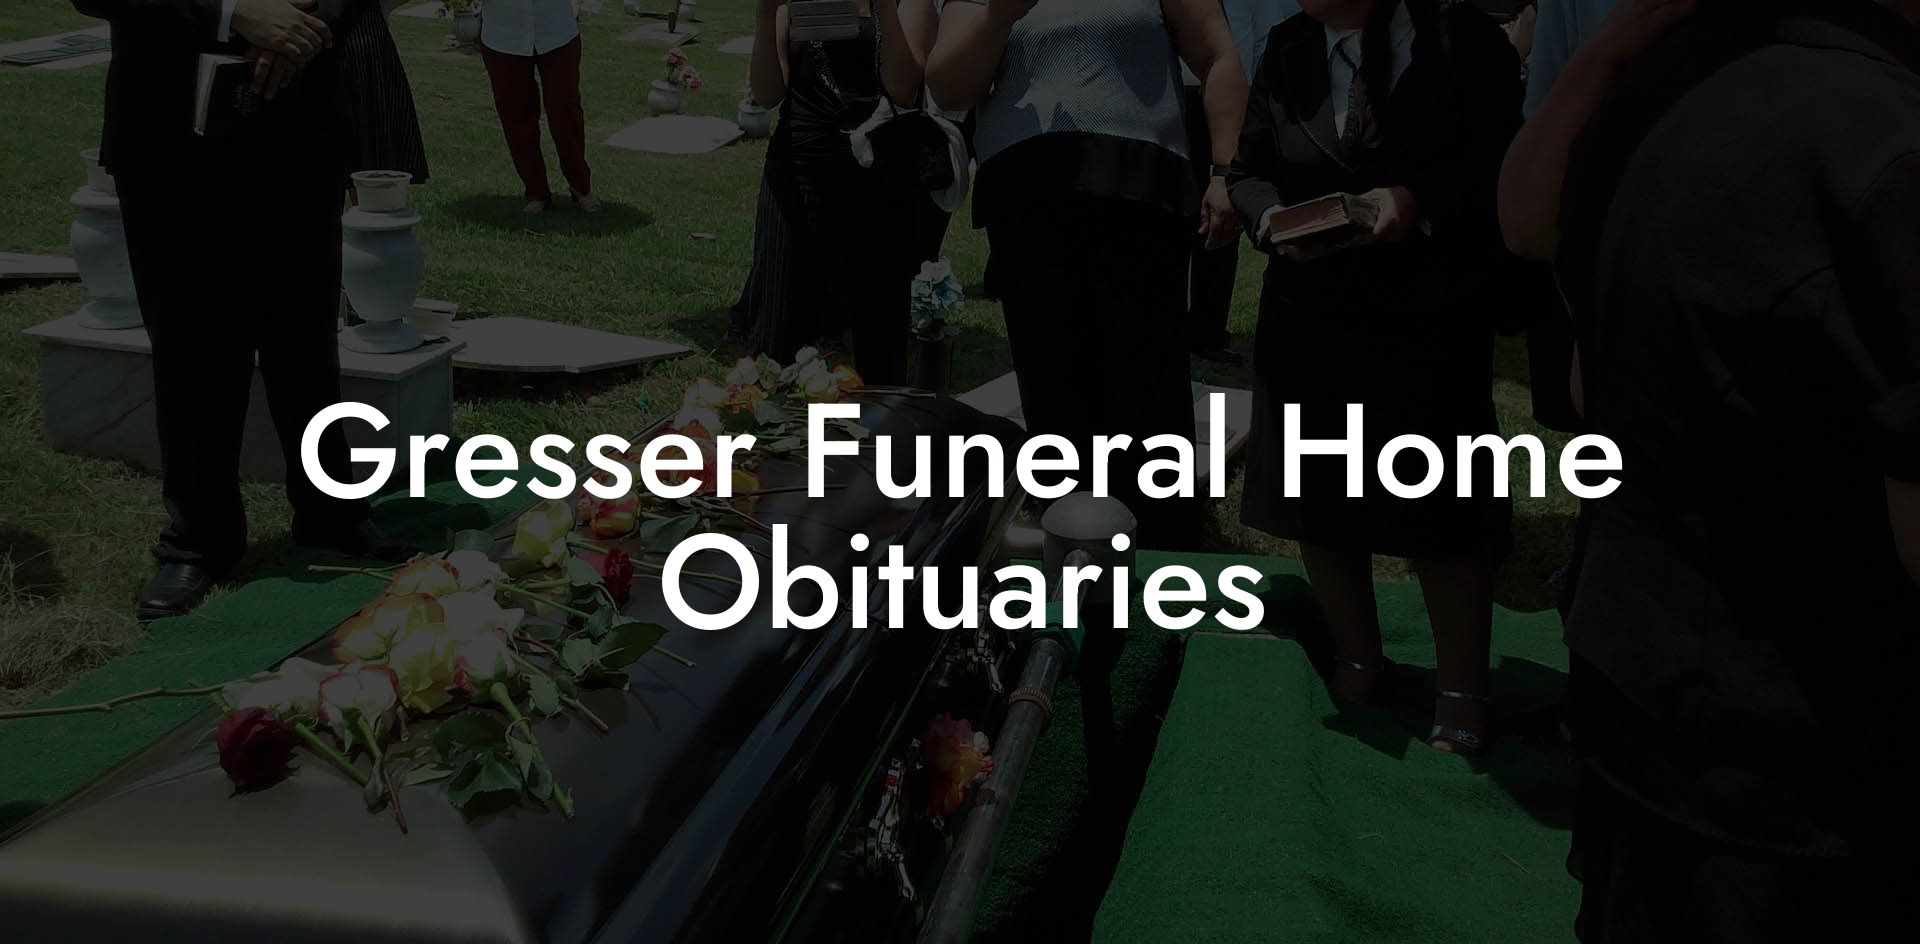 Gresser Funeral Home Obituaries